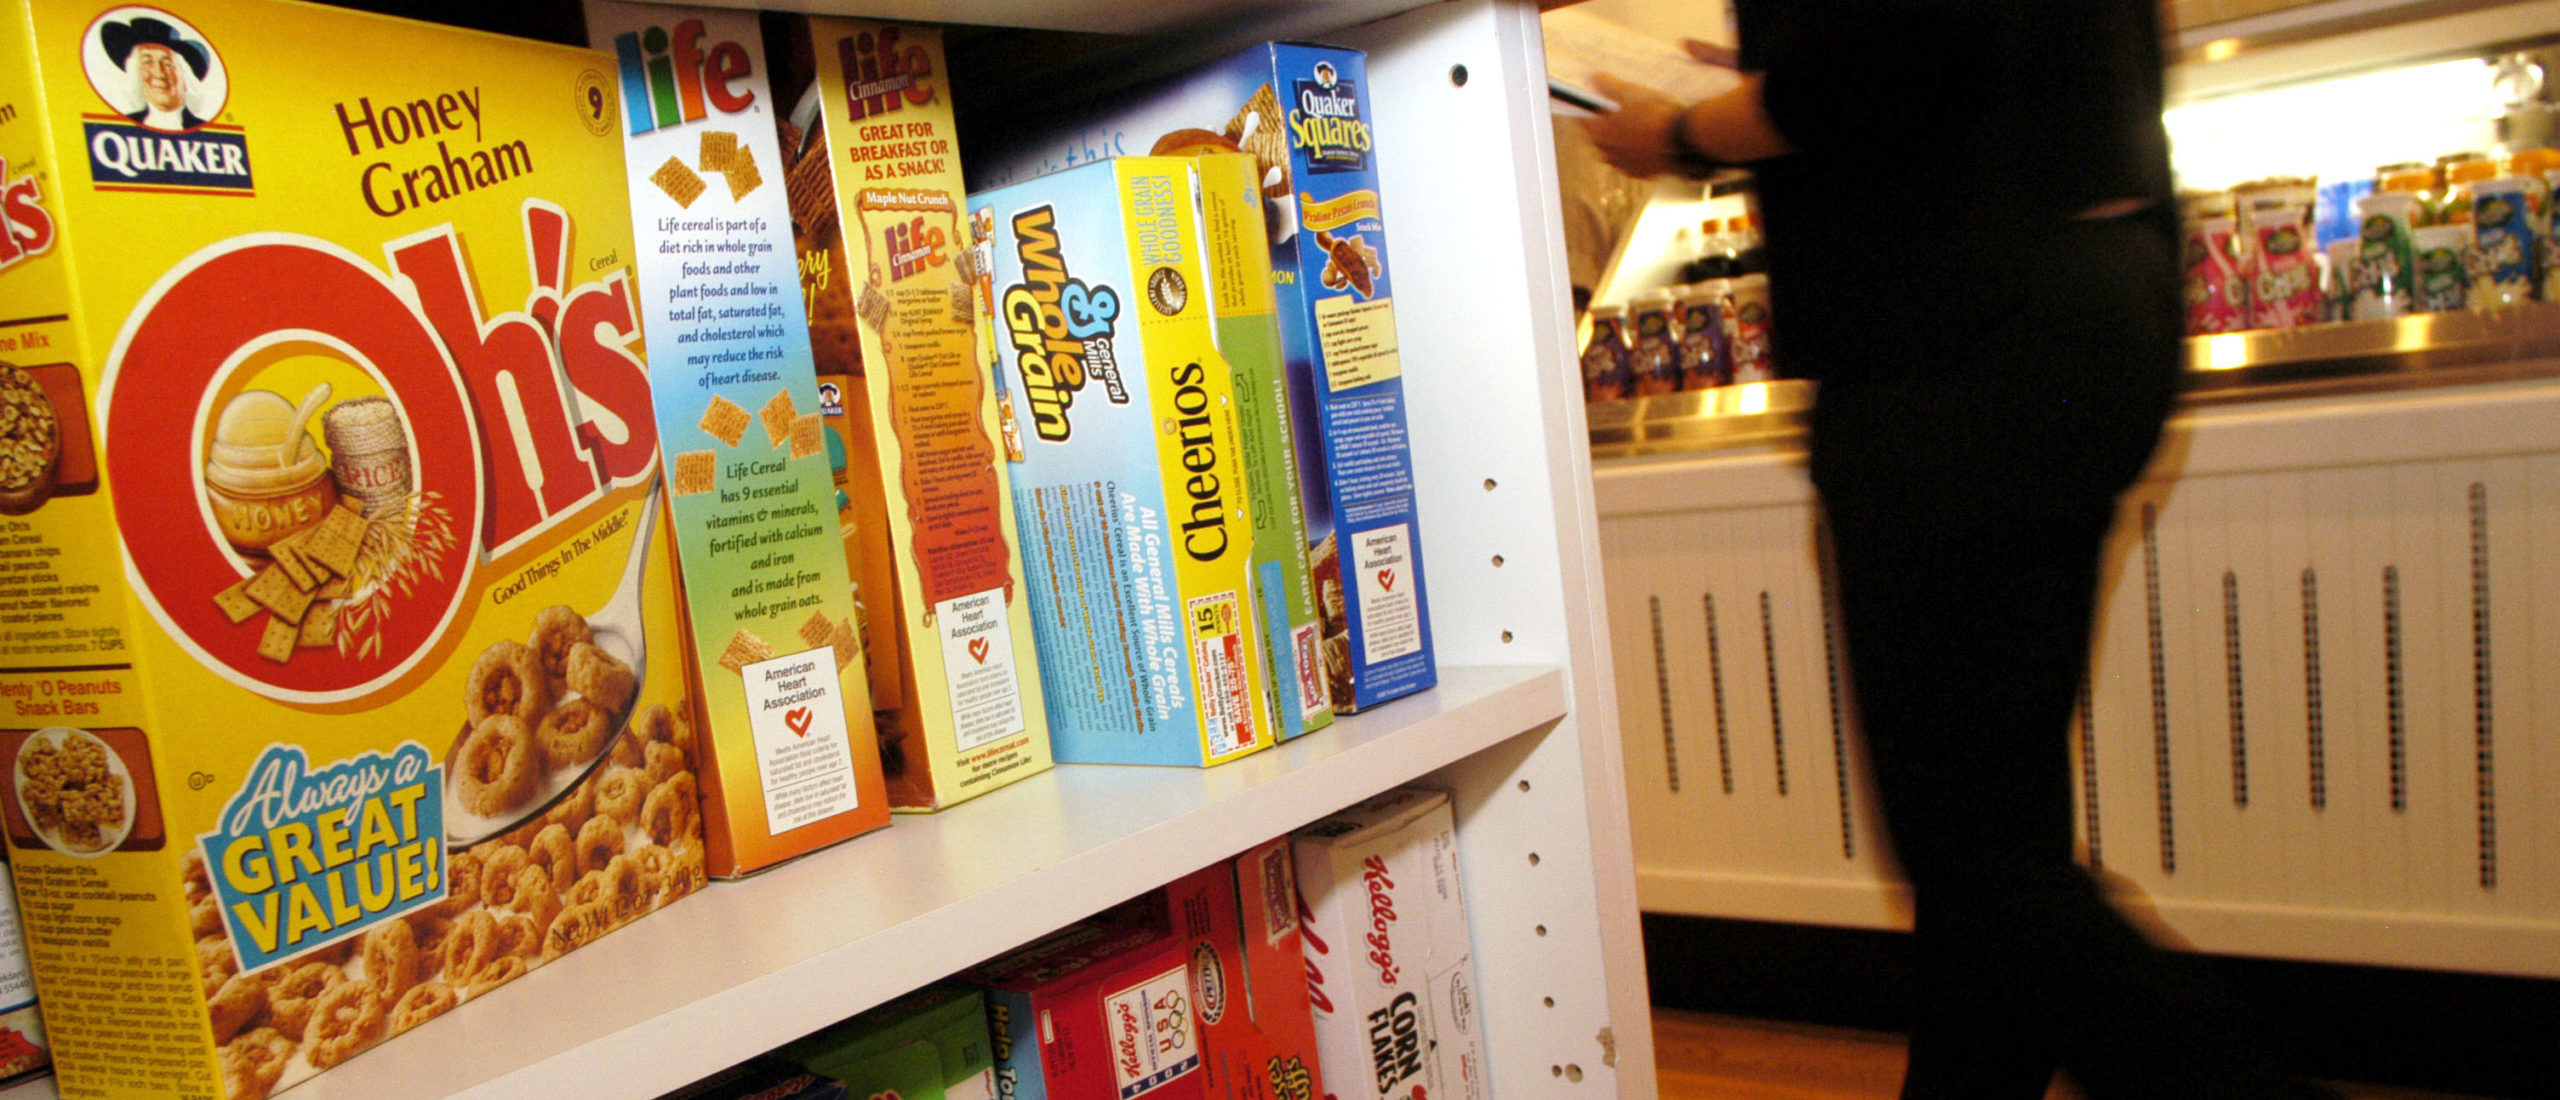 Quaker Oats Recalls Over 60 Cereals, Snacks Due To Salmonella Concerns